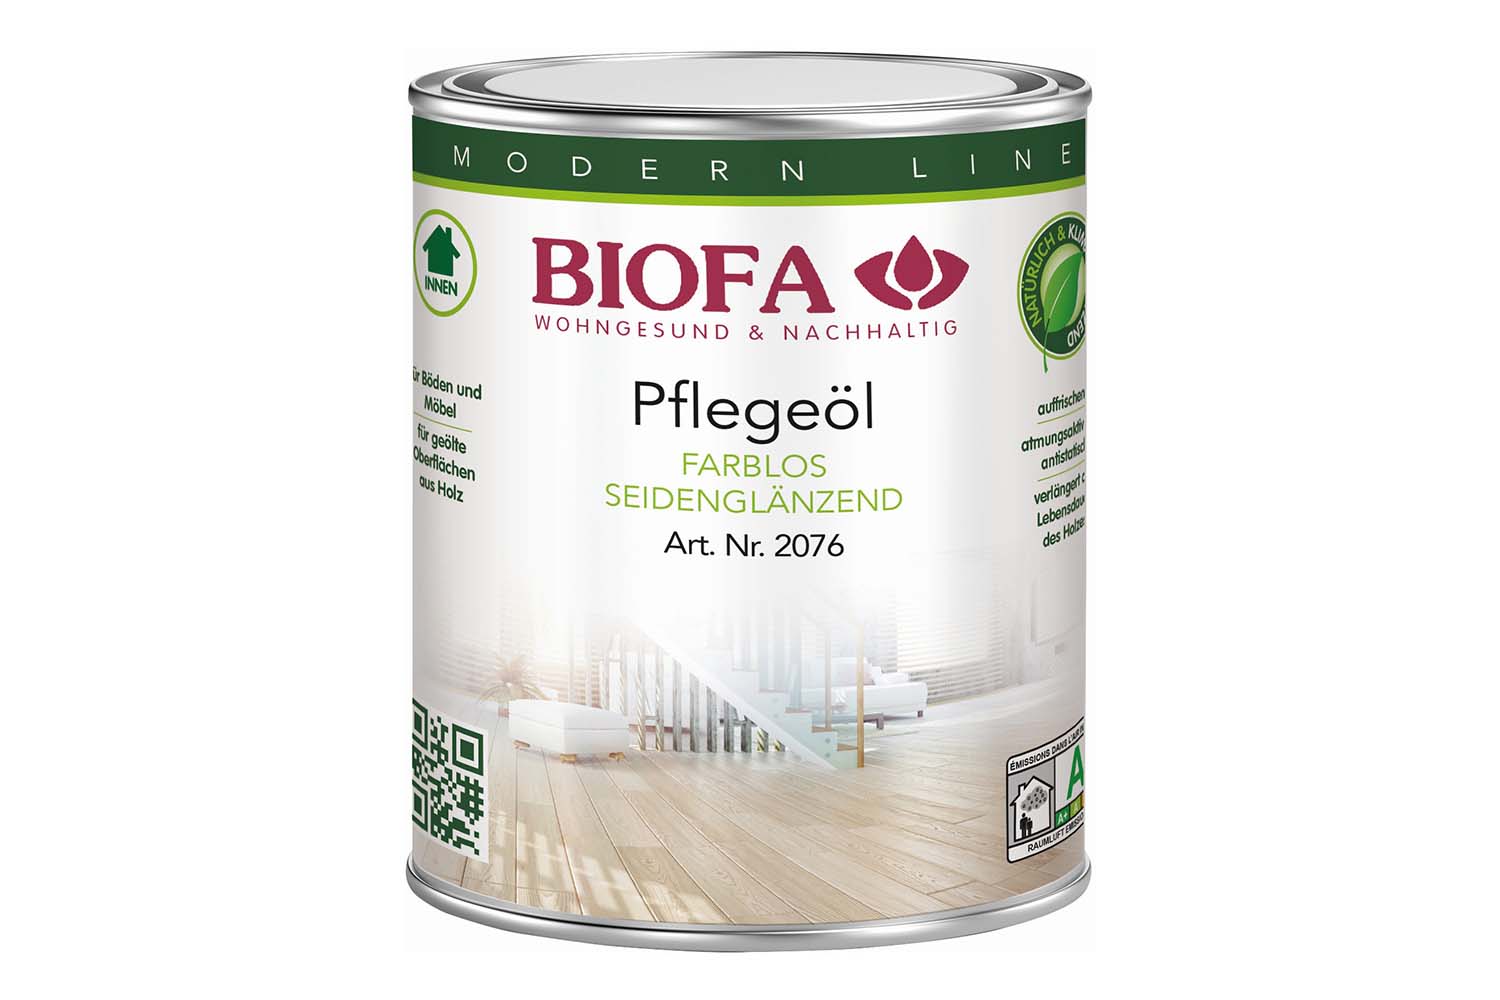 Biofa Pflegeöl